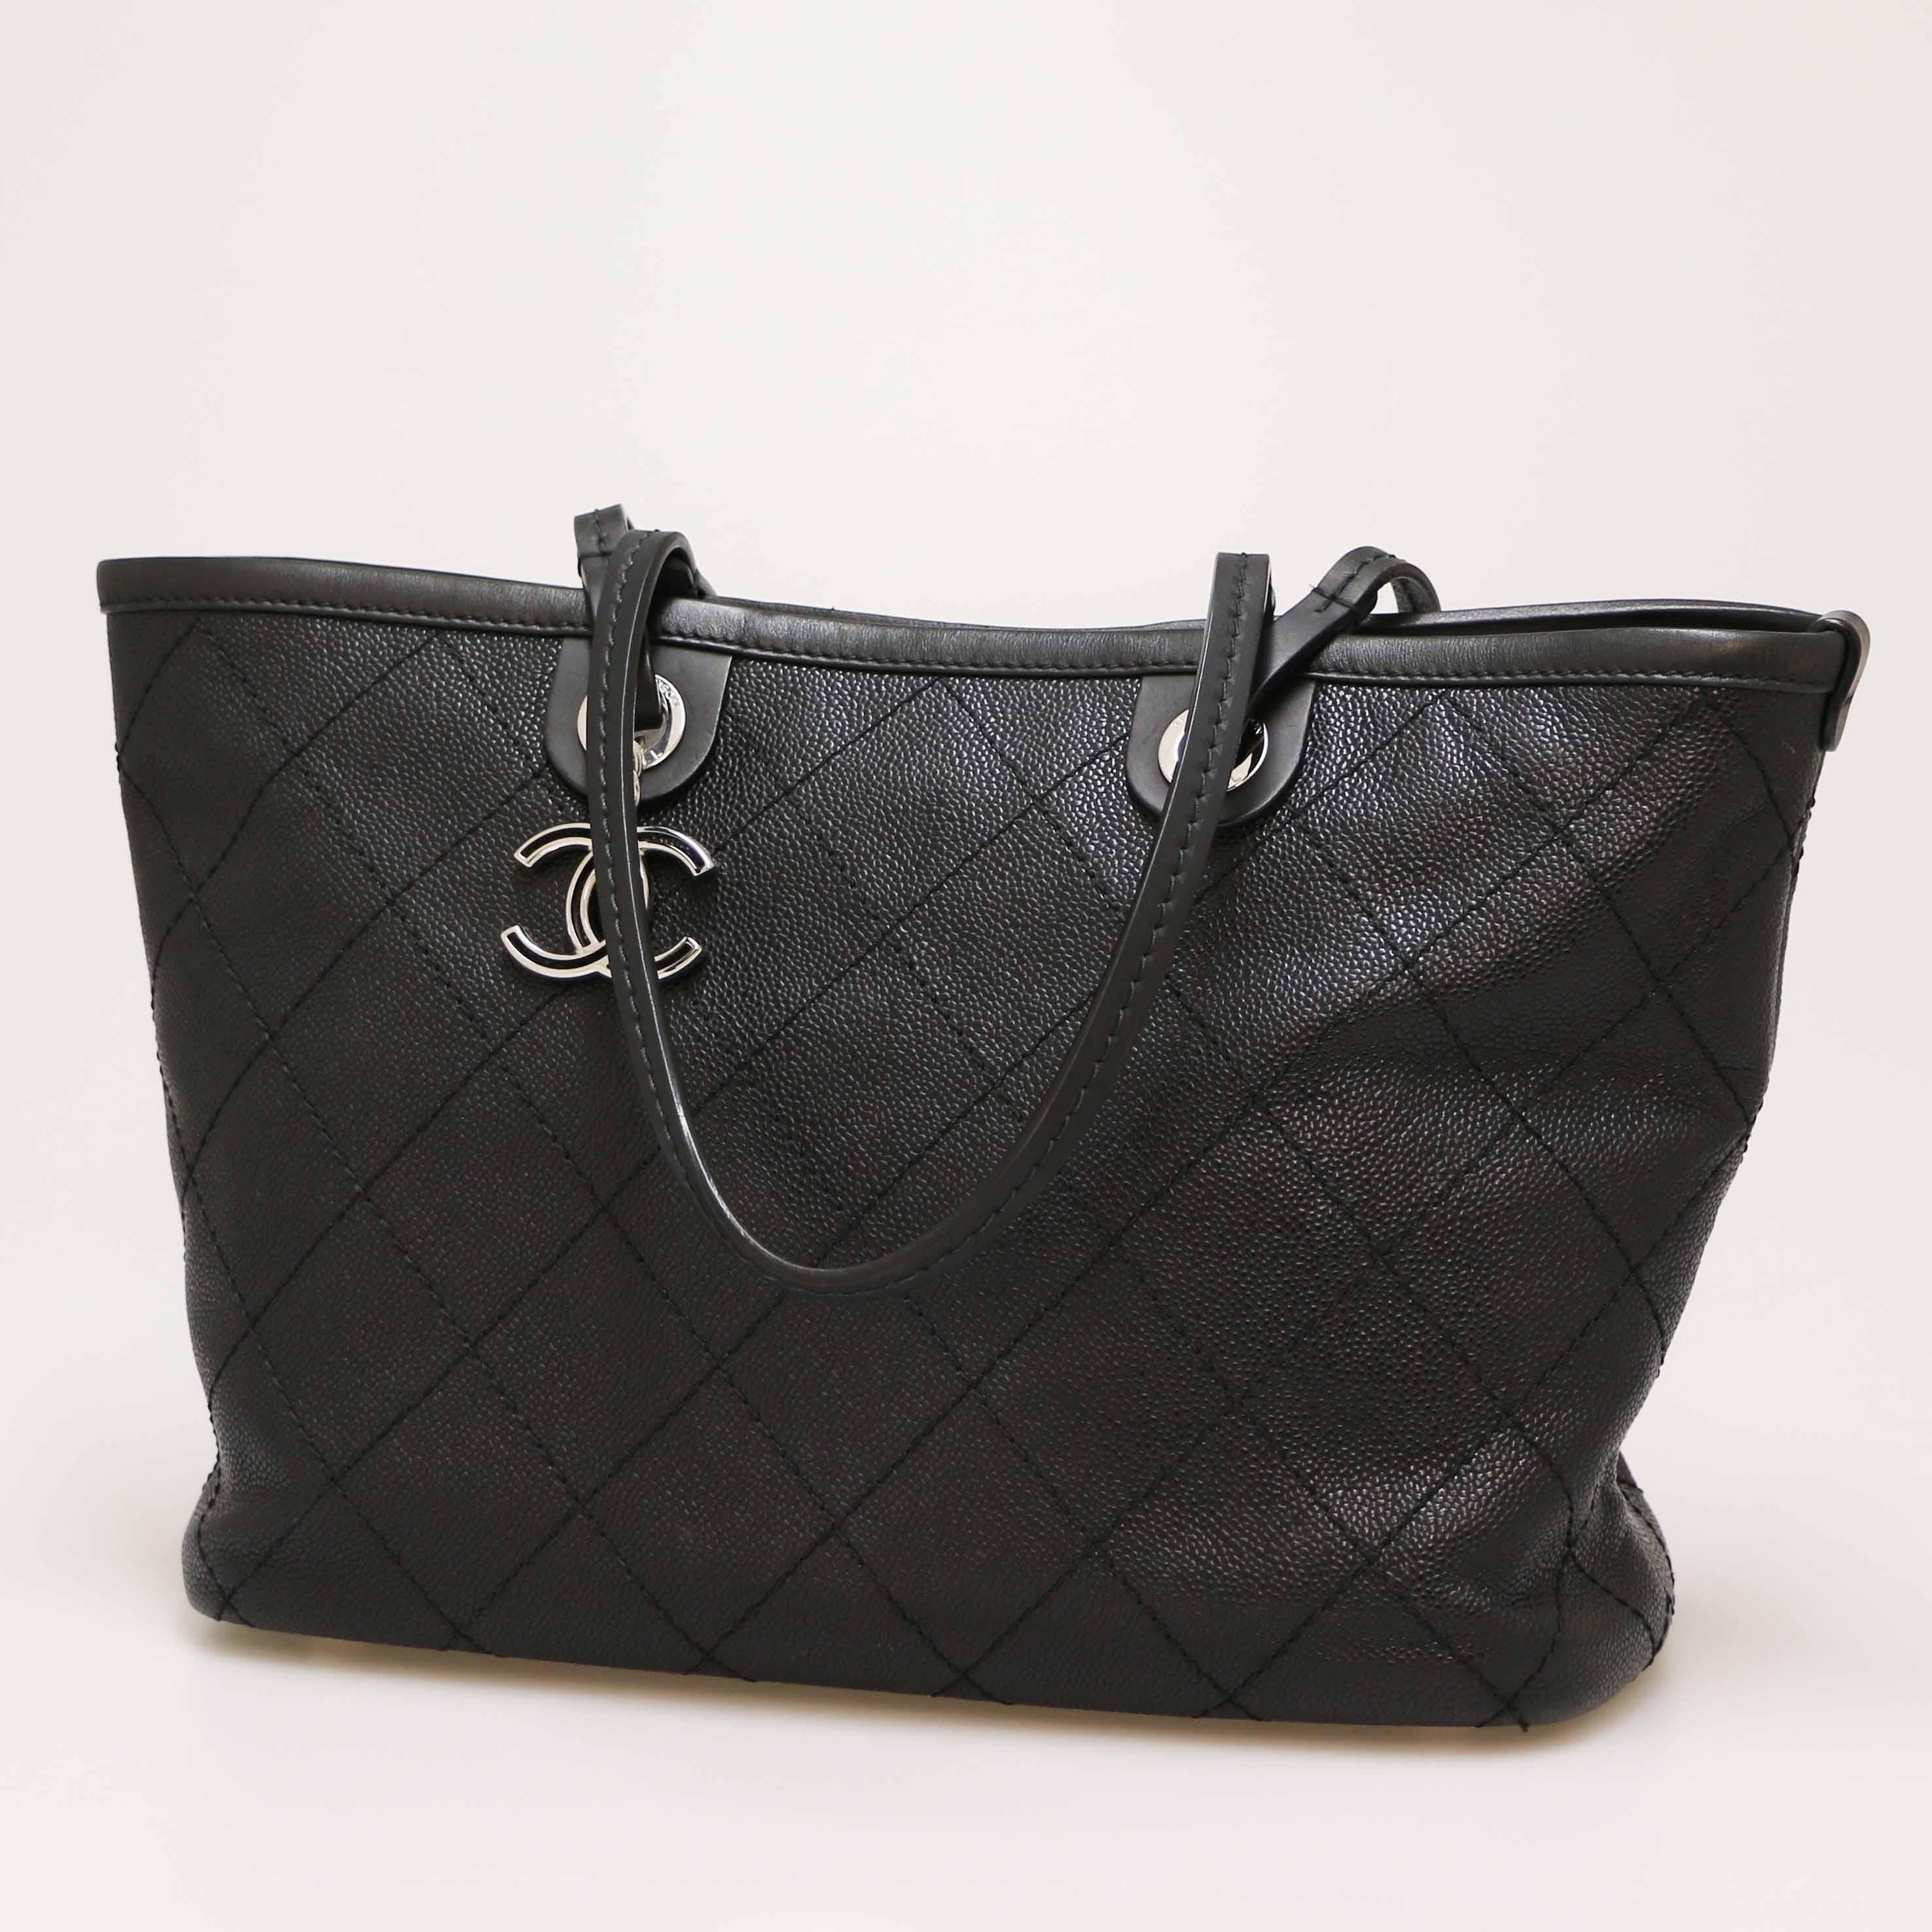 Chanel Black Tote Bag 9